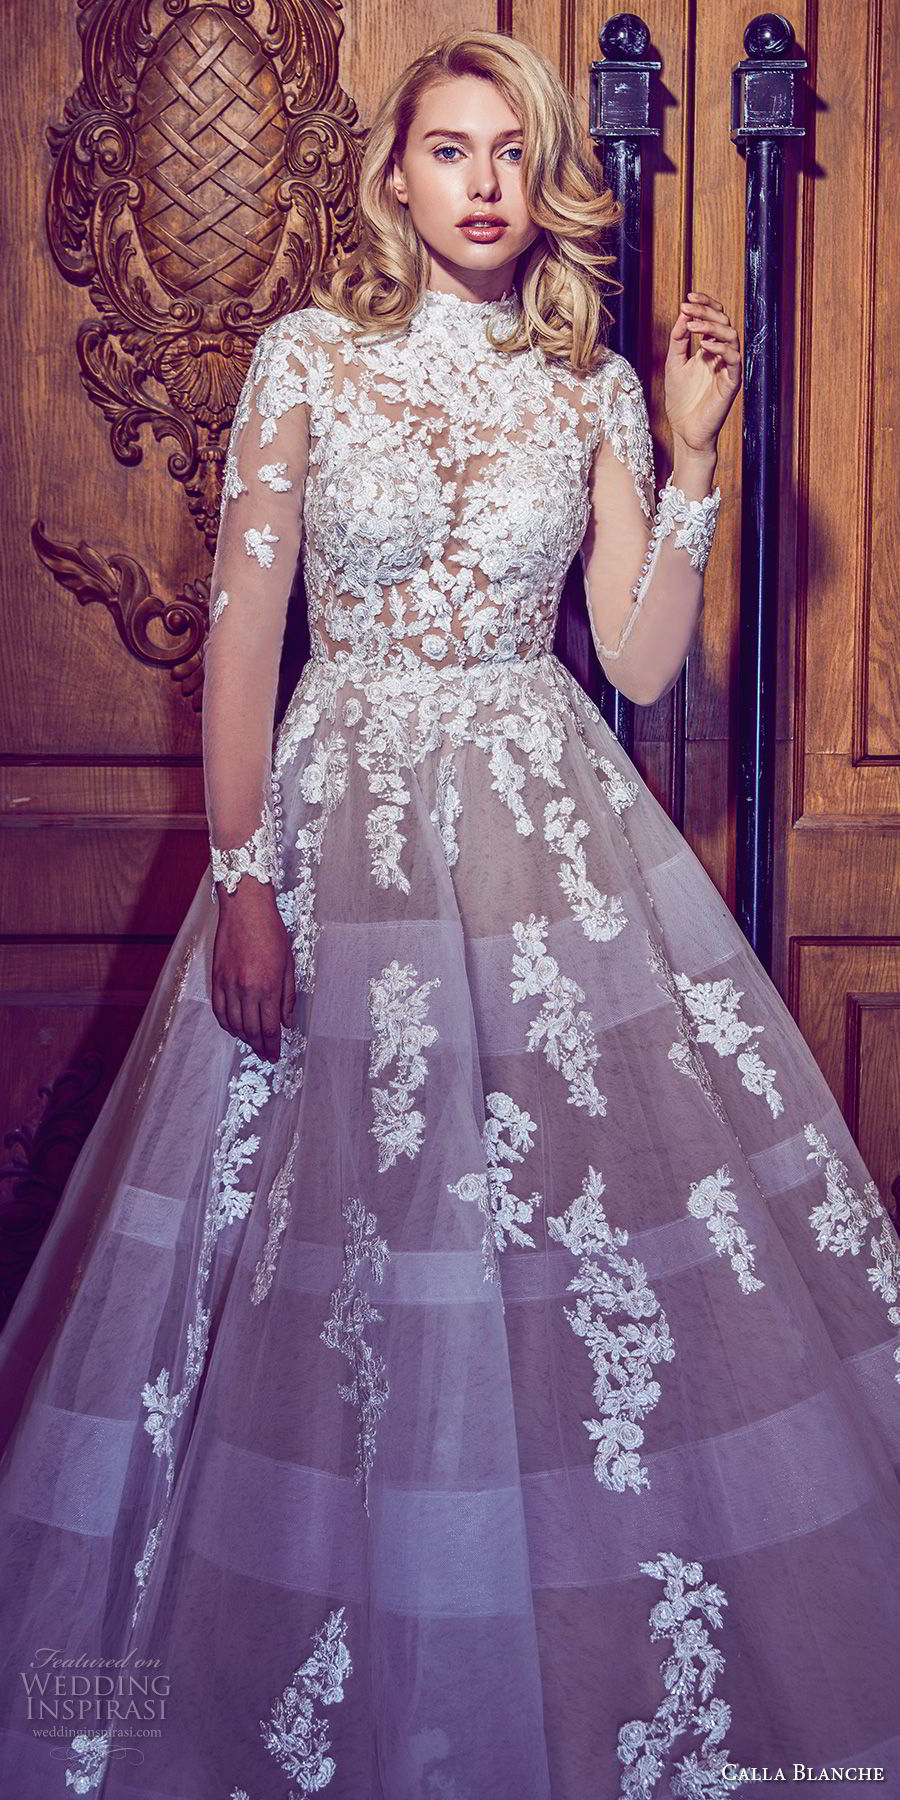 Calla Blanche Fall 2017 Wedding Dresses | Wedding Inspirasi